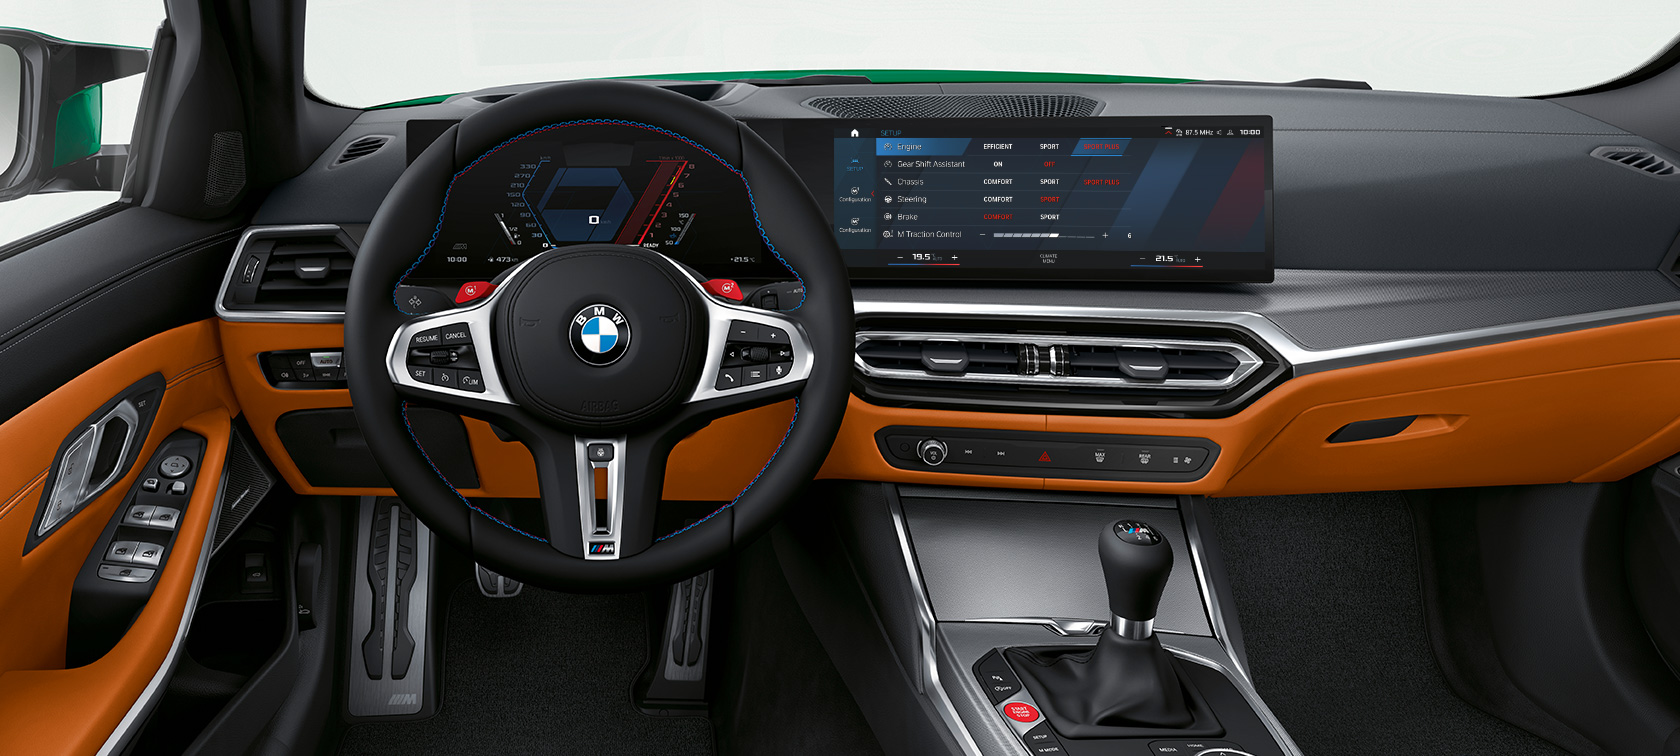 BMW M3 CS G80 cockpit interior 